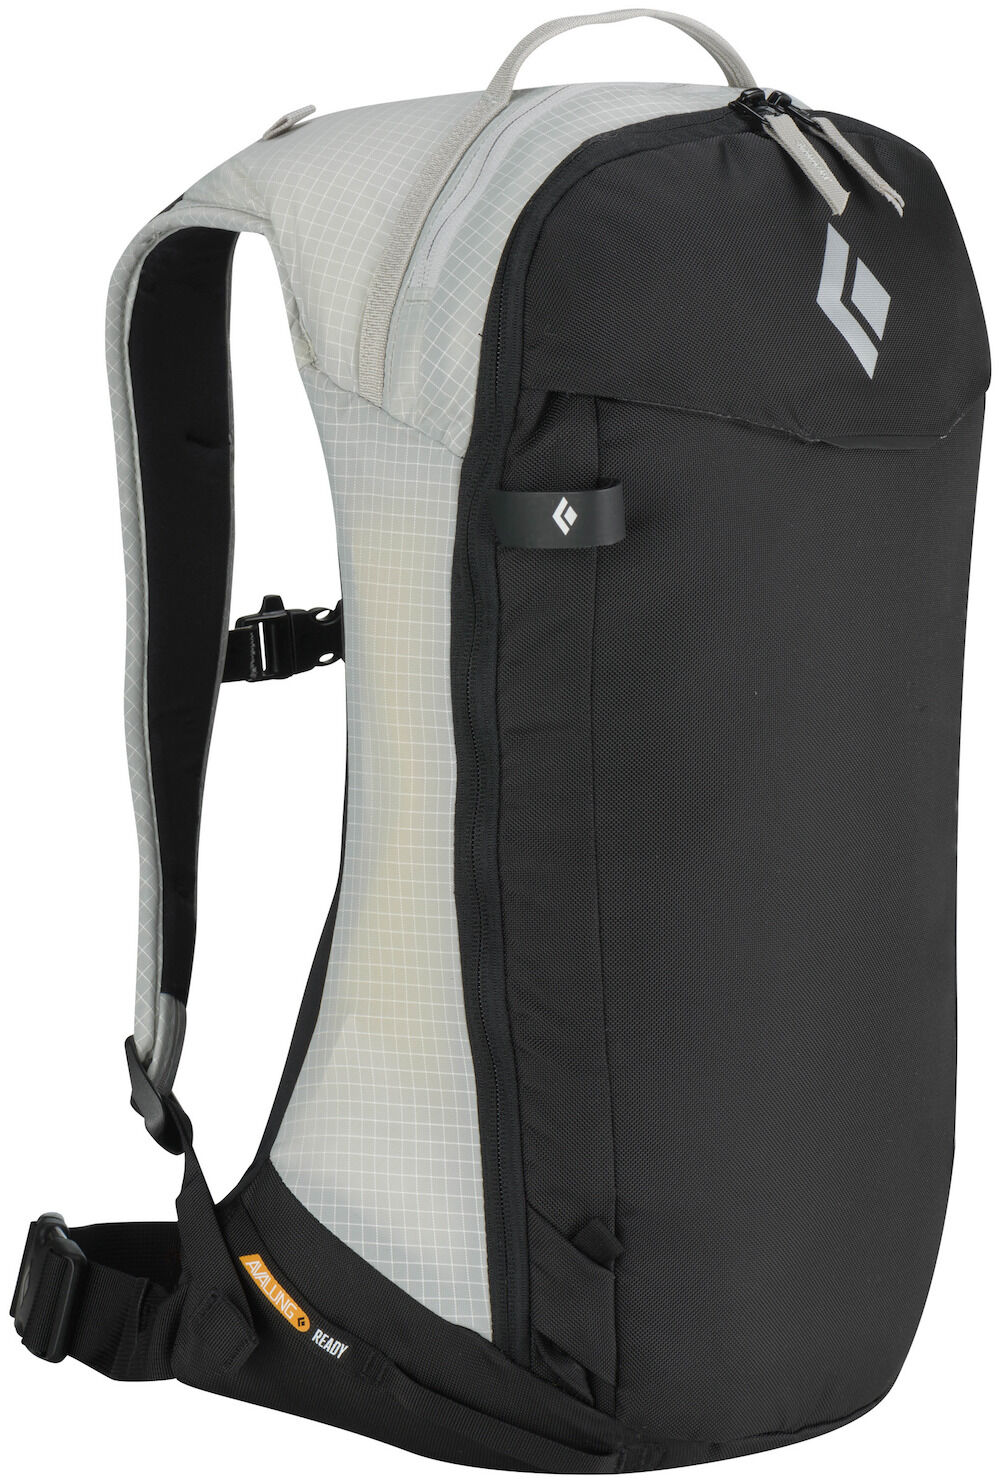 Black Diamond - Dawn Patrol 15 - Ski Touring backpack